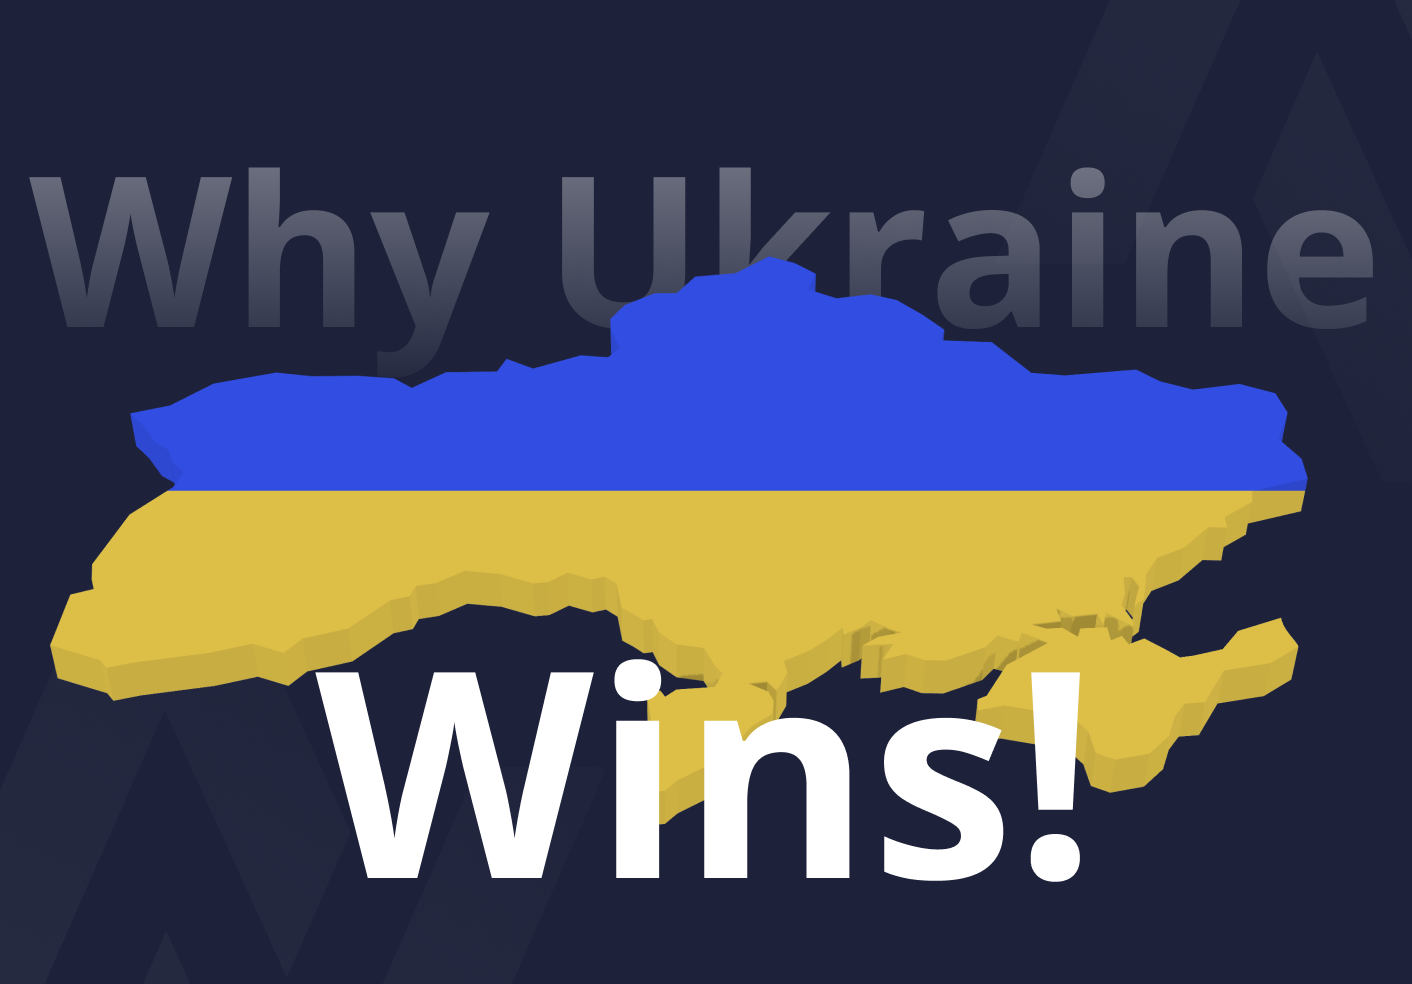 Why Ukraine wins.